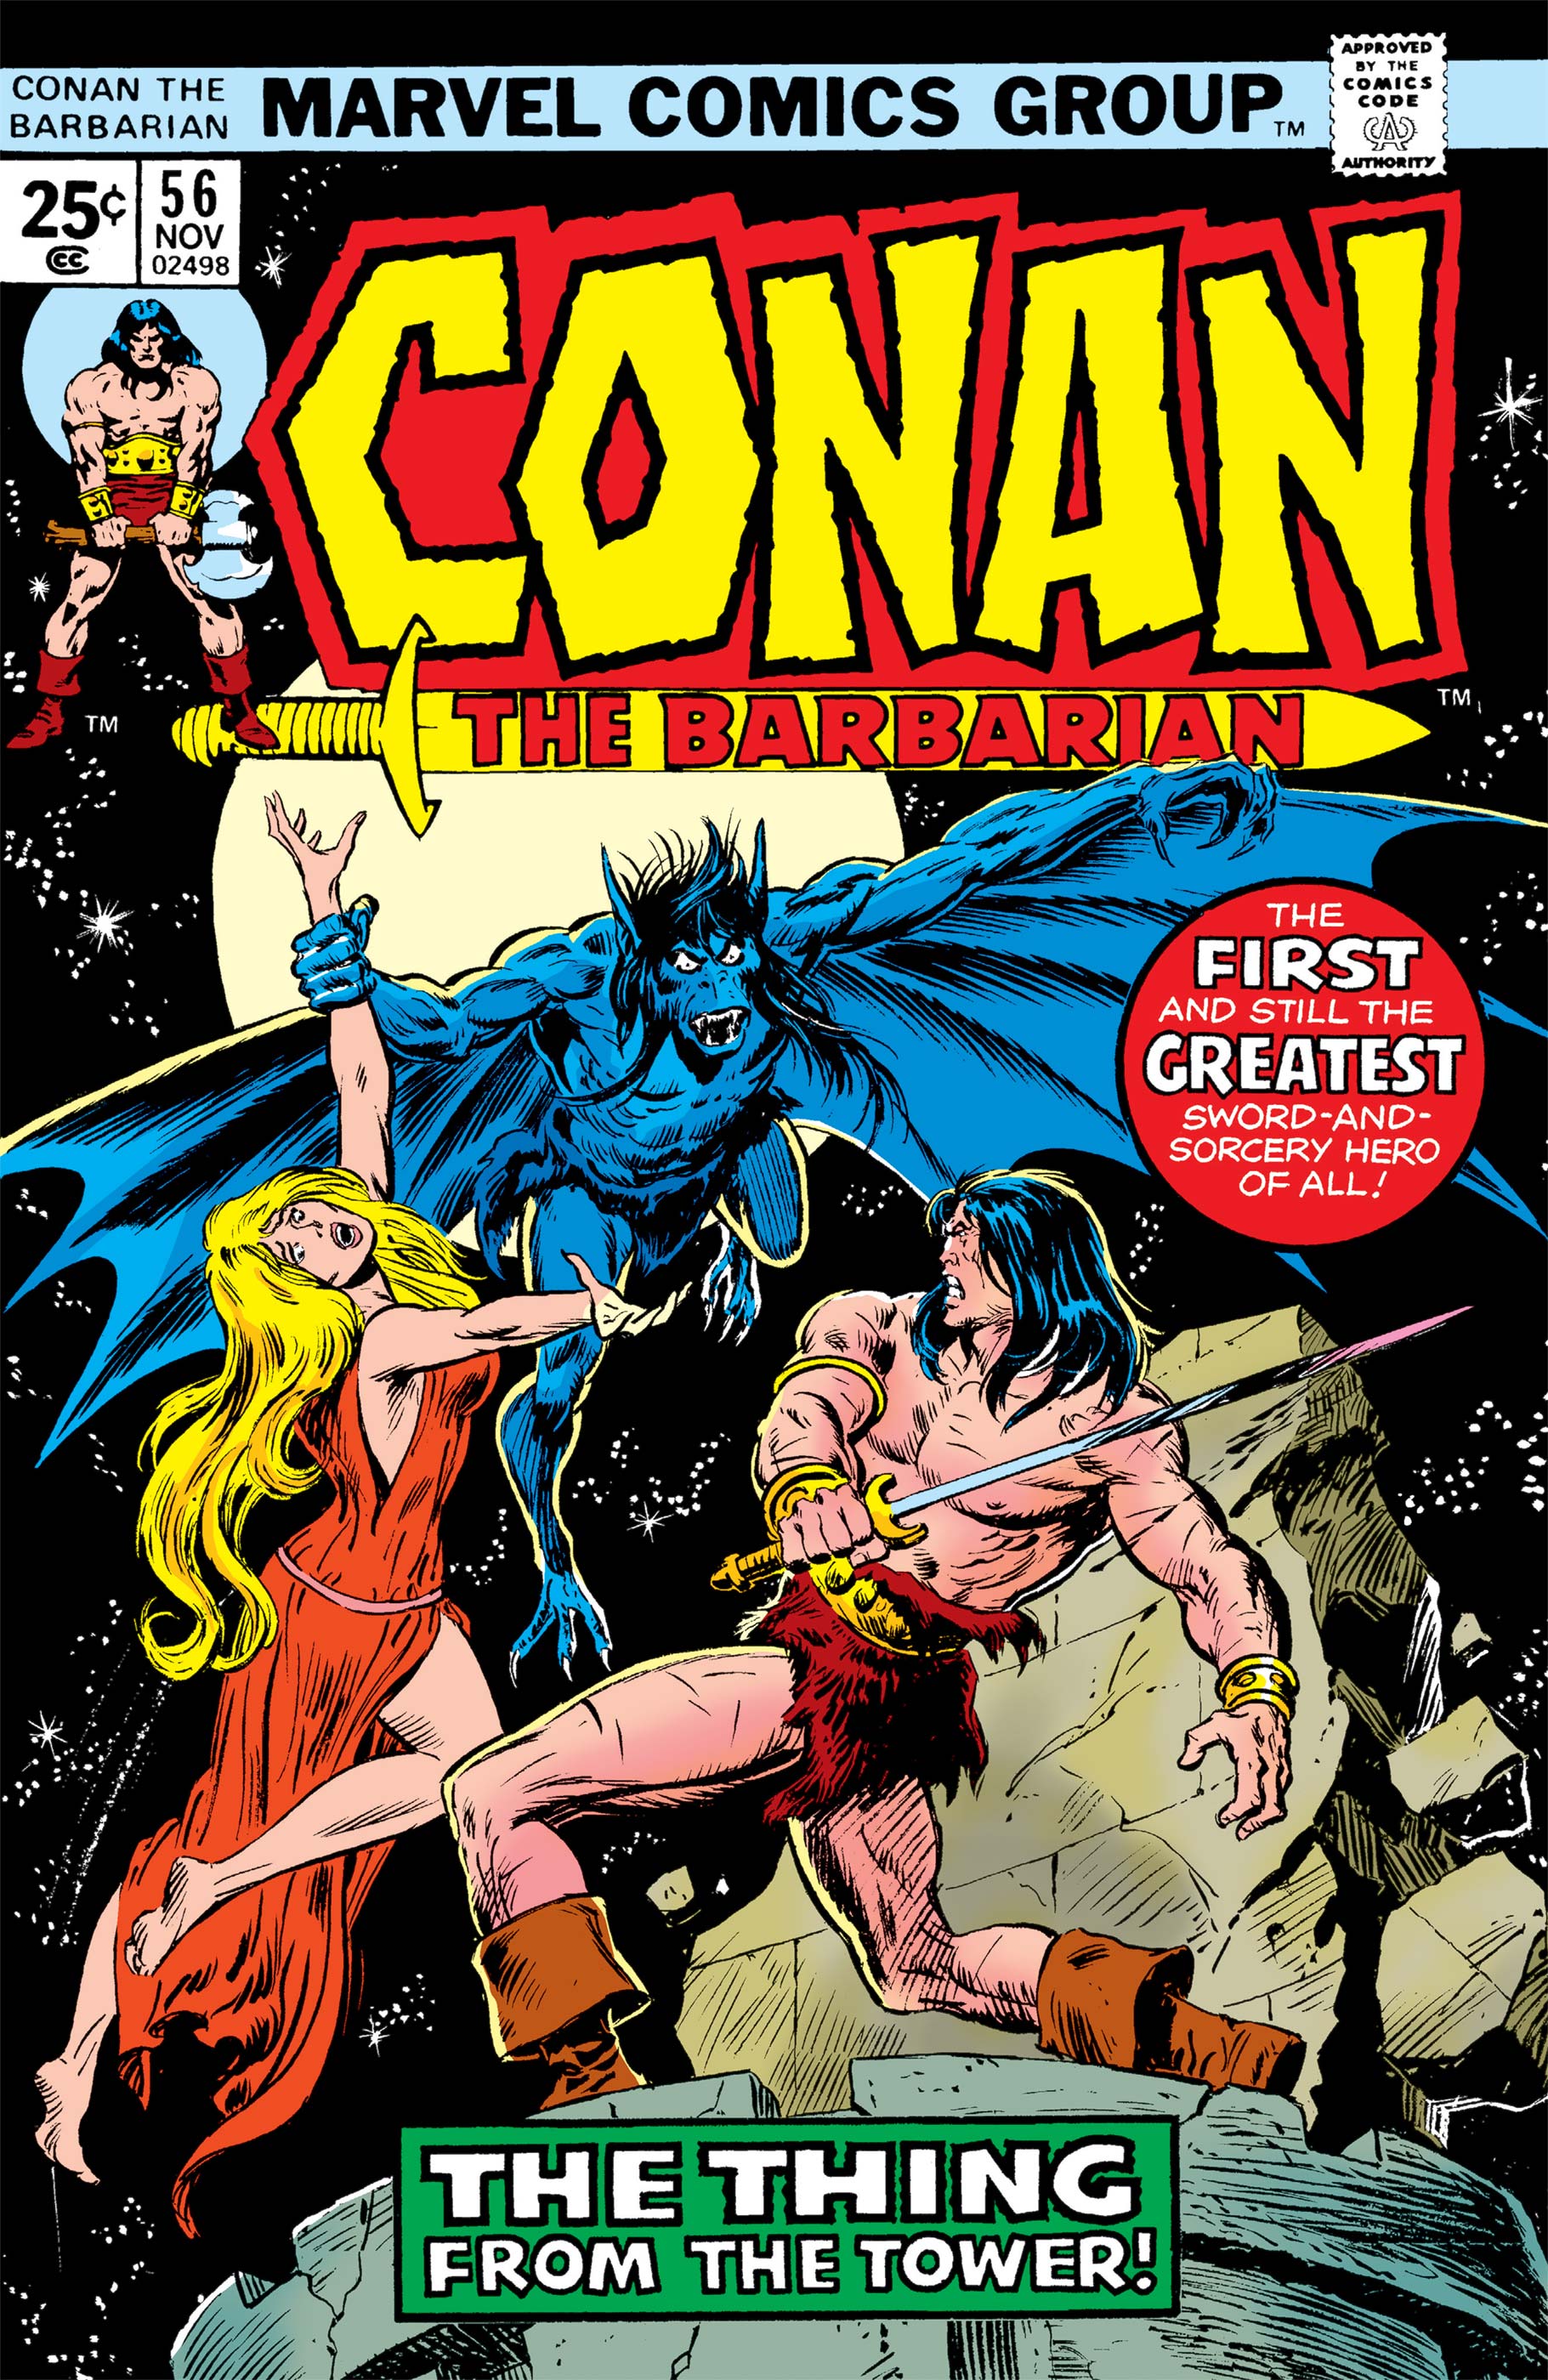 Conan the Barbarian (1970) #56